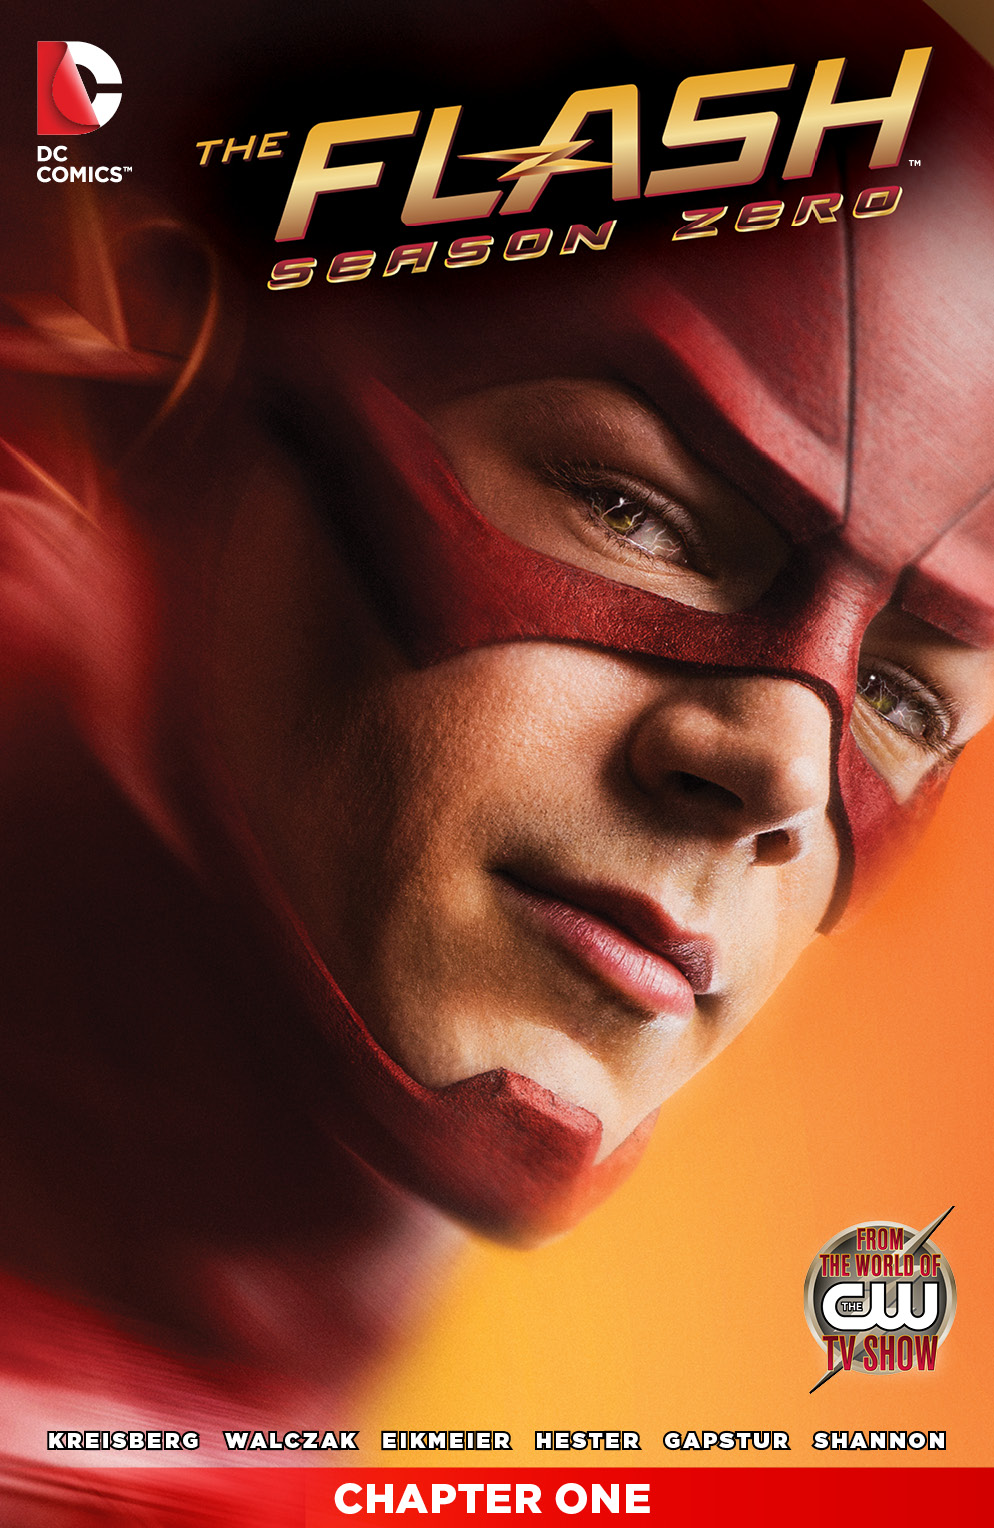 The Flash: Season Zero #1 preview images